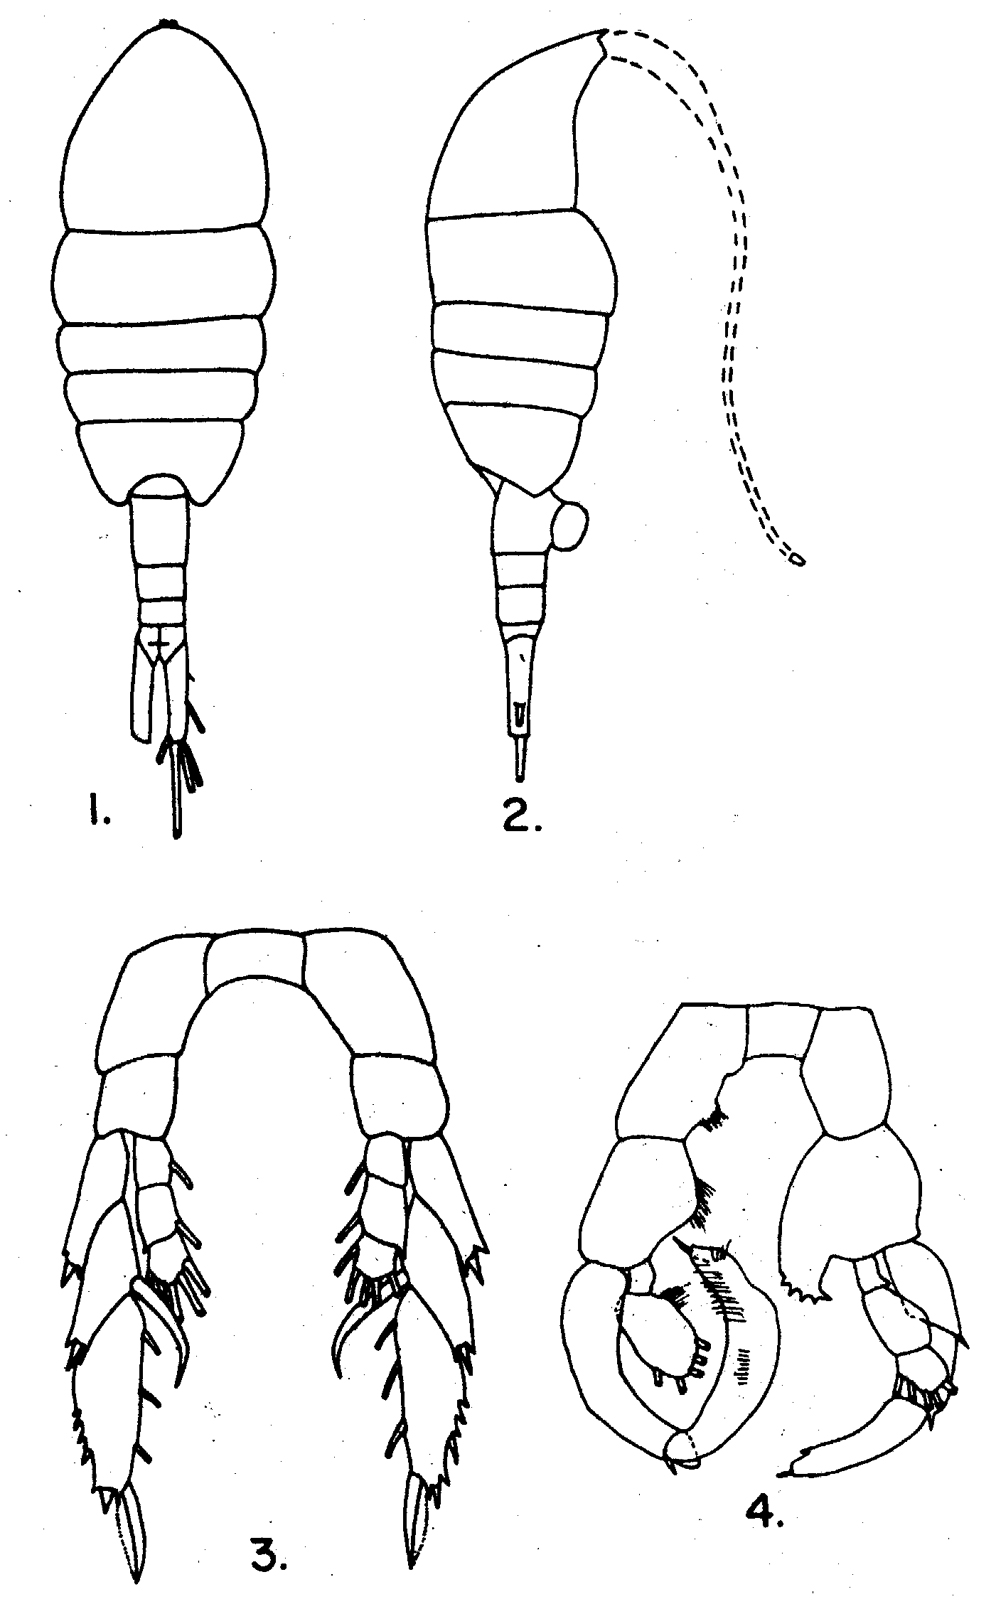 Species Lucicutia flavicornis - Plate 18 of morphological figures